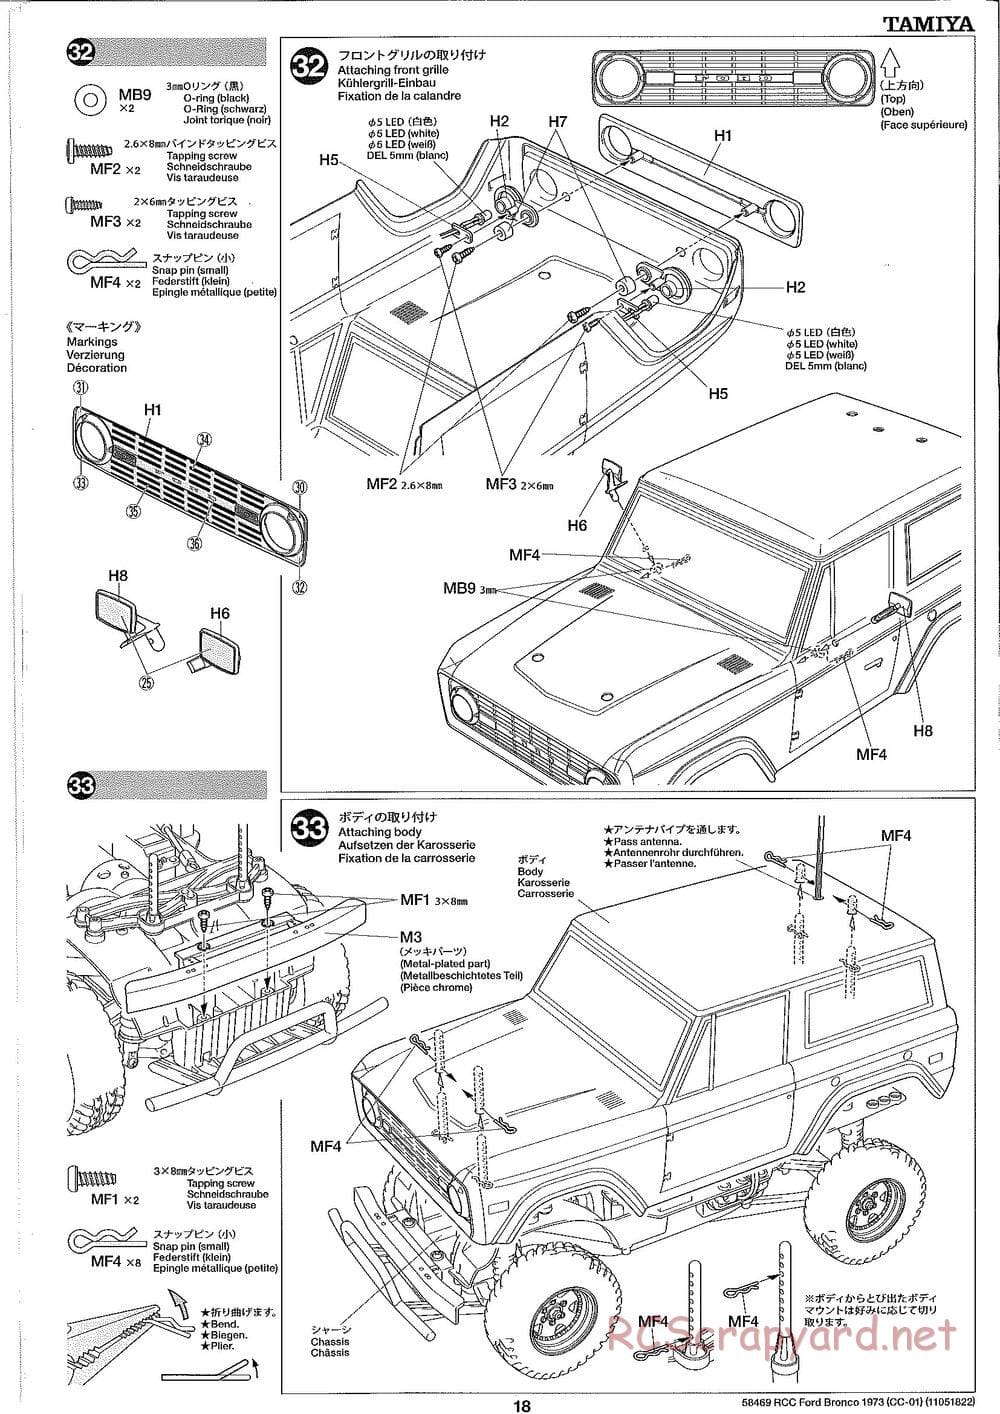 Tamiya - Ford Bronco 1973 - CC-01 Chassis - Manual - Page 18